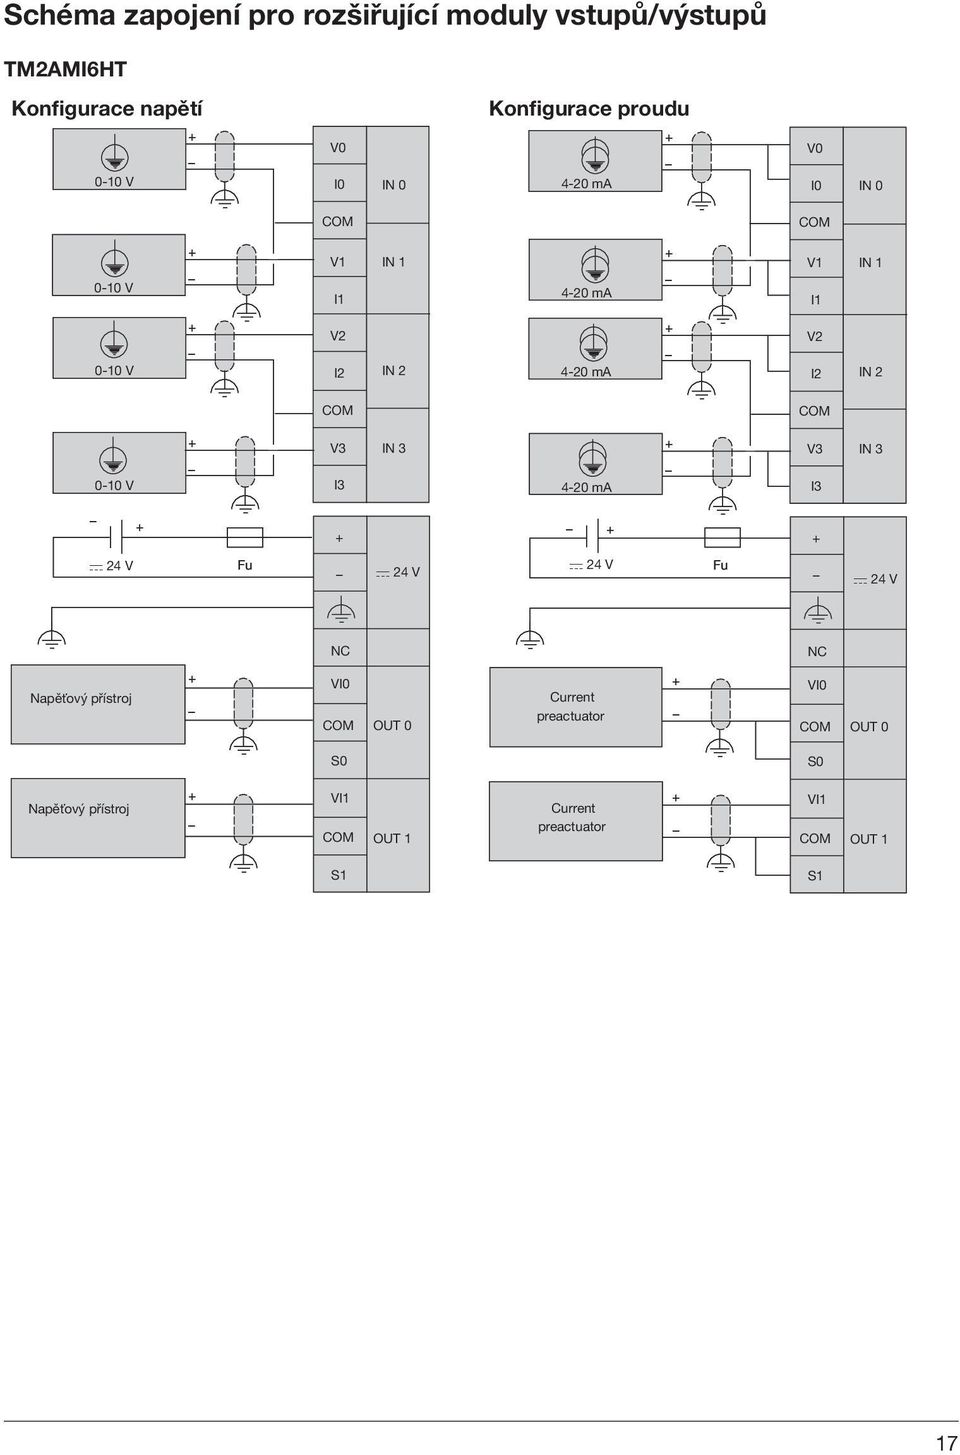 V3 I3 IN 3 4-20 m V3 I3 IN 3 Fu Fu Voltage Napěťový preactuator přístroj VI0 COM OUT 0 Current preactuator VI0